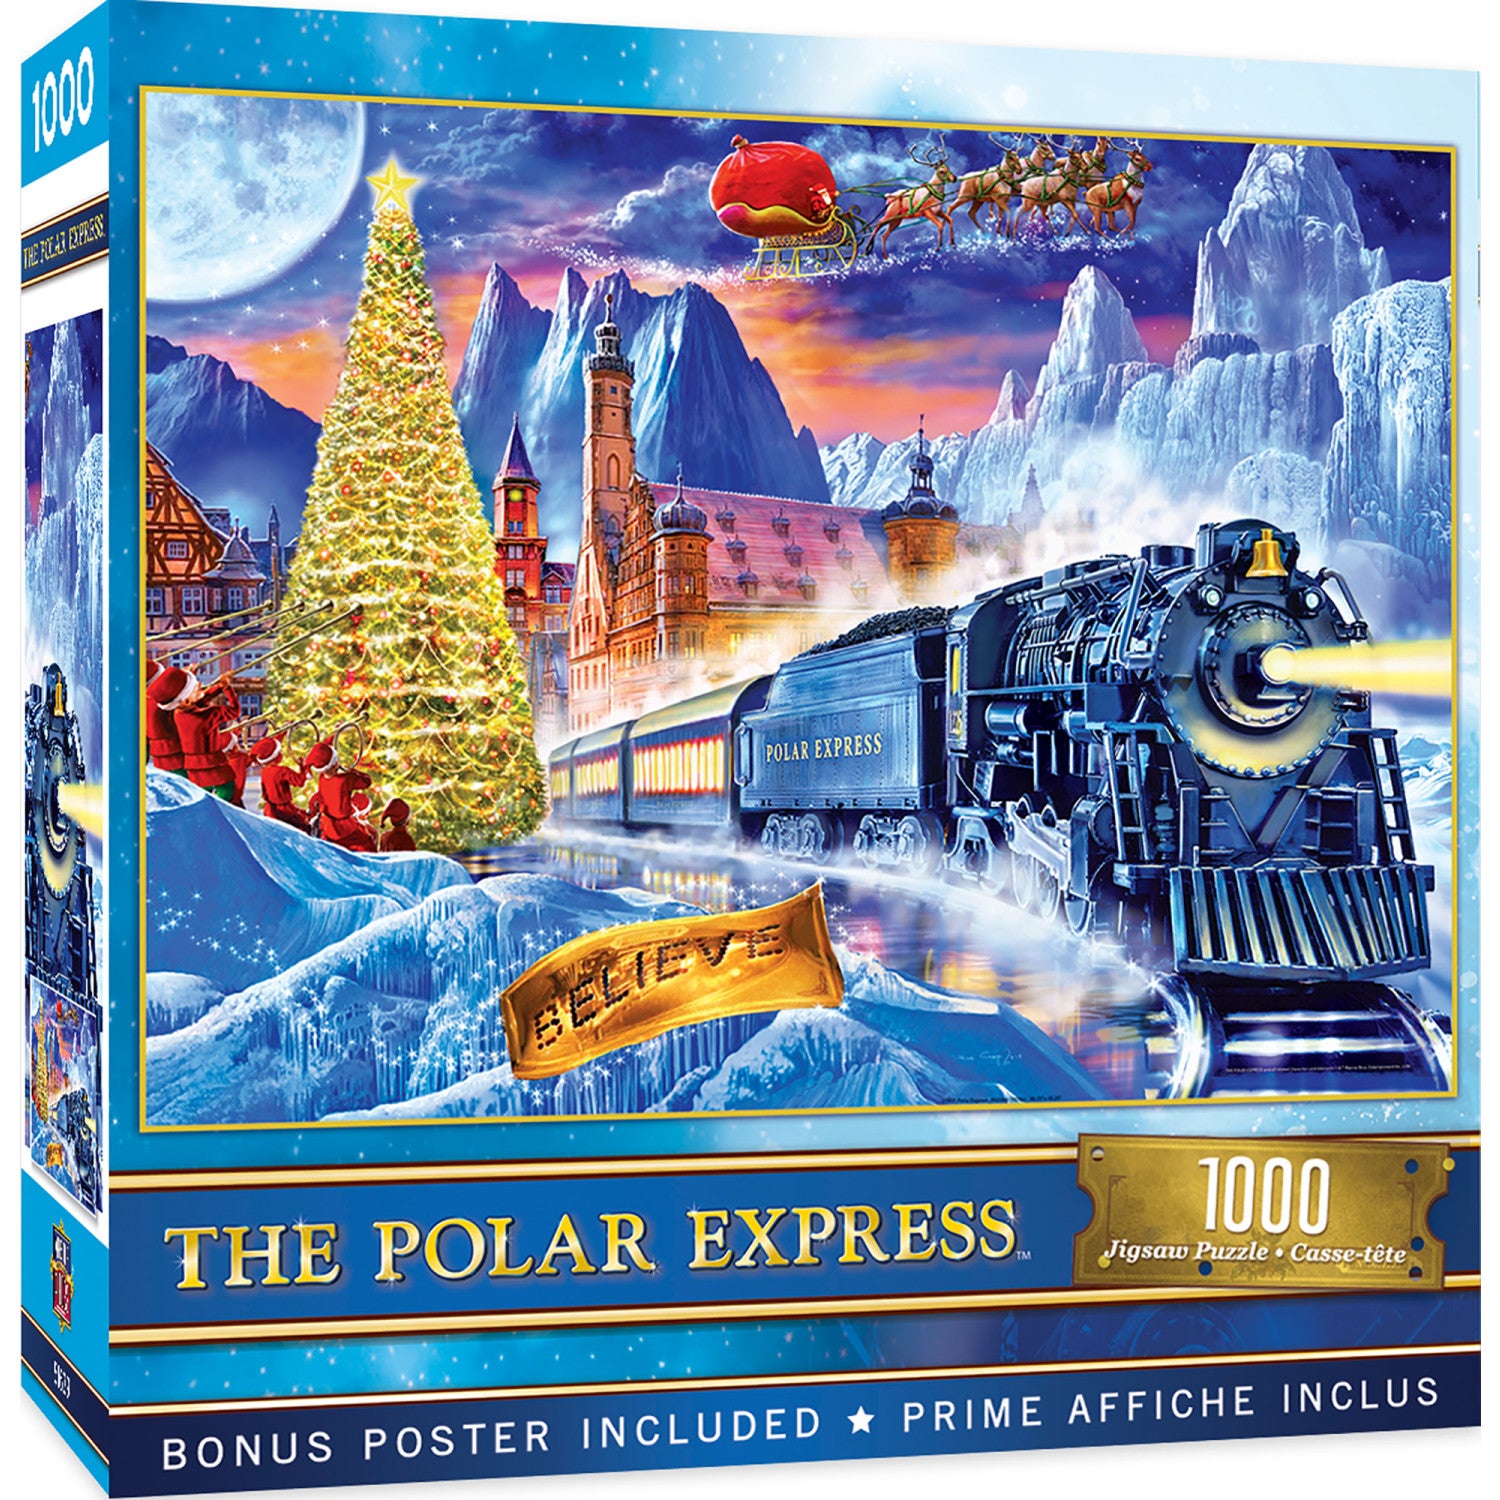 The Polar Express 1000 Piece Jigsaw Puzzle